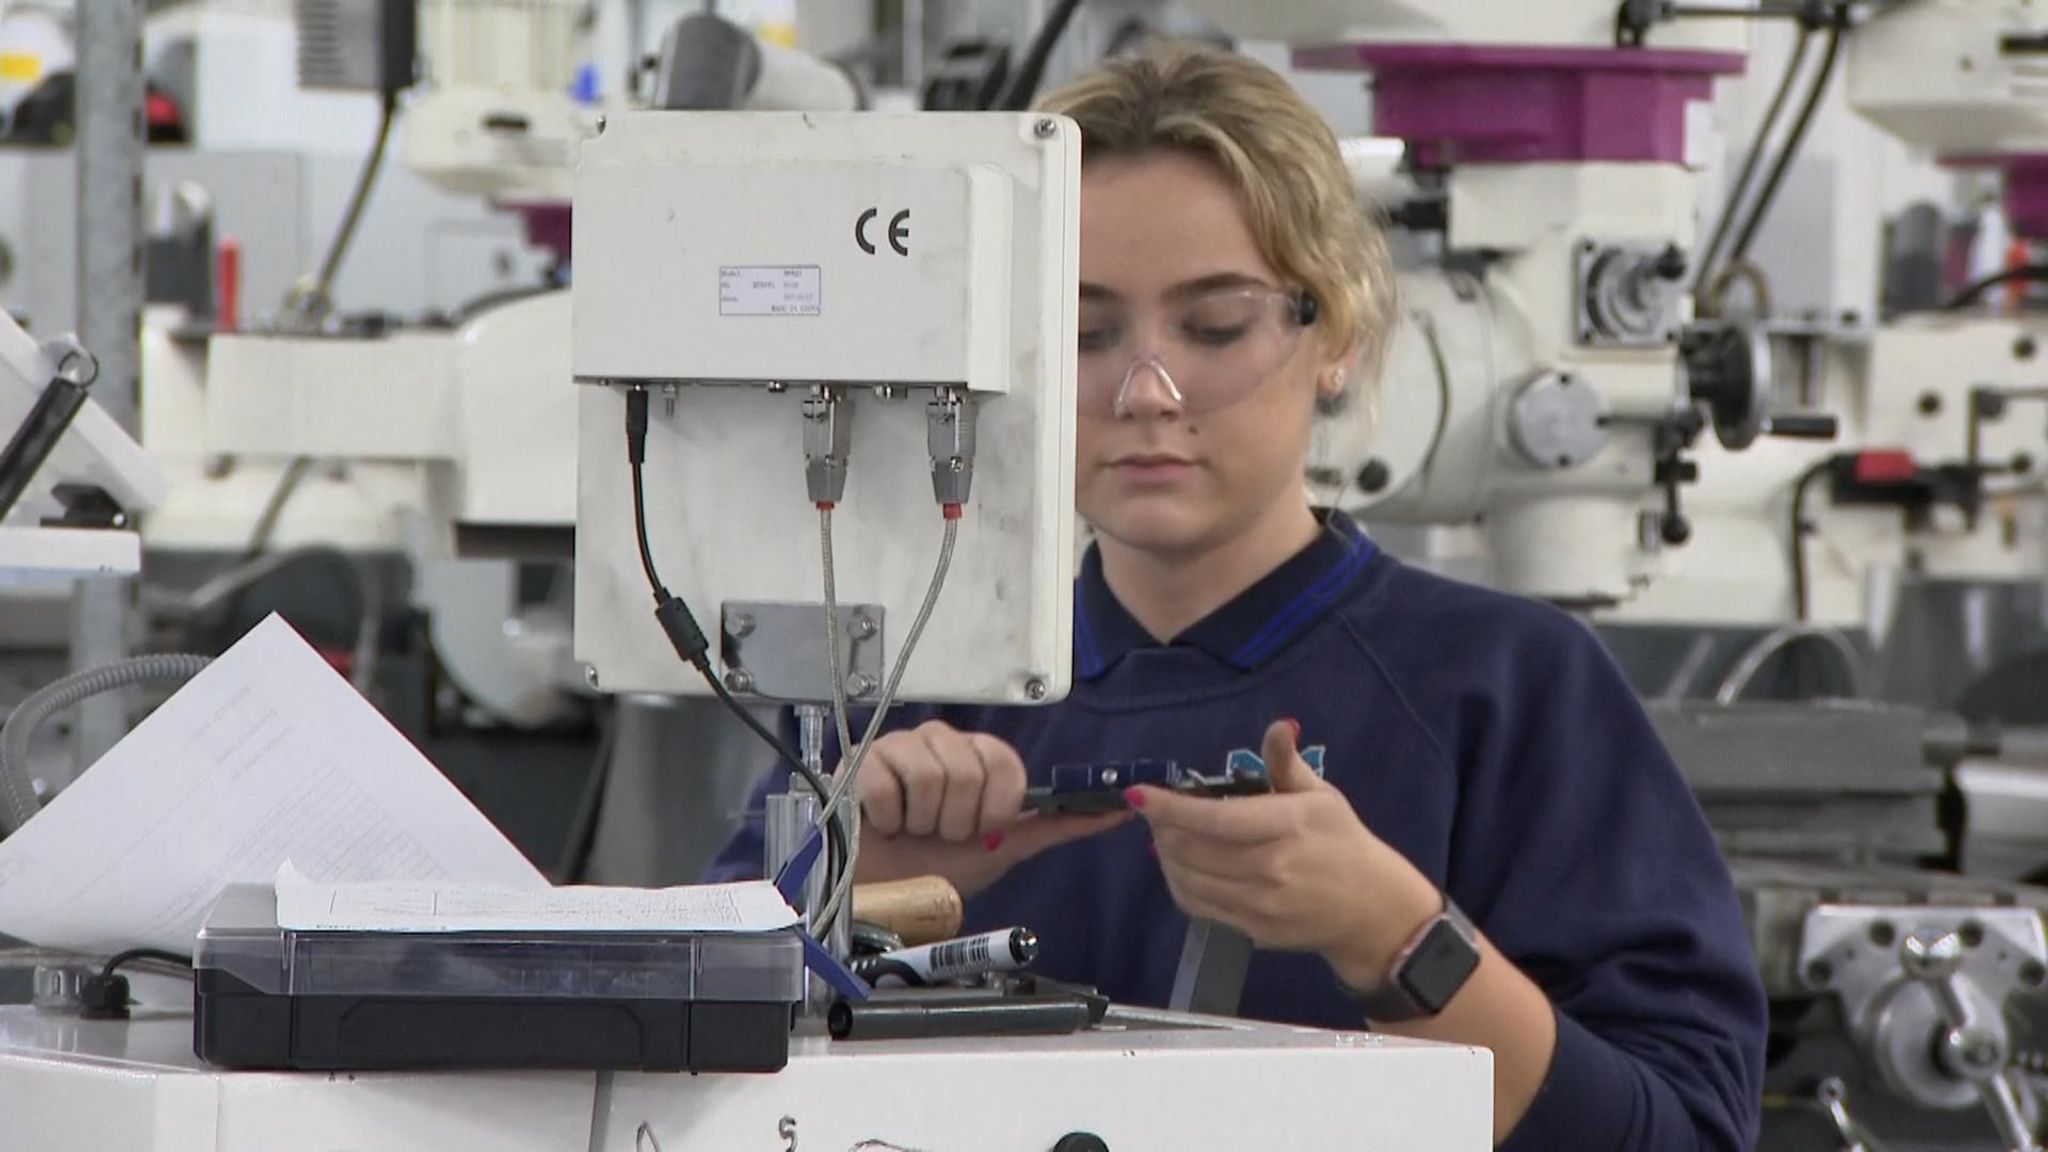 UK manufacturing industry facing post-Brexit skills shortage | UK News ...